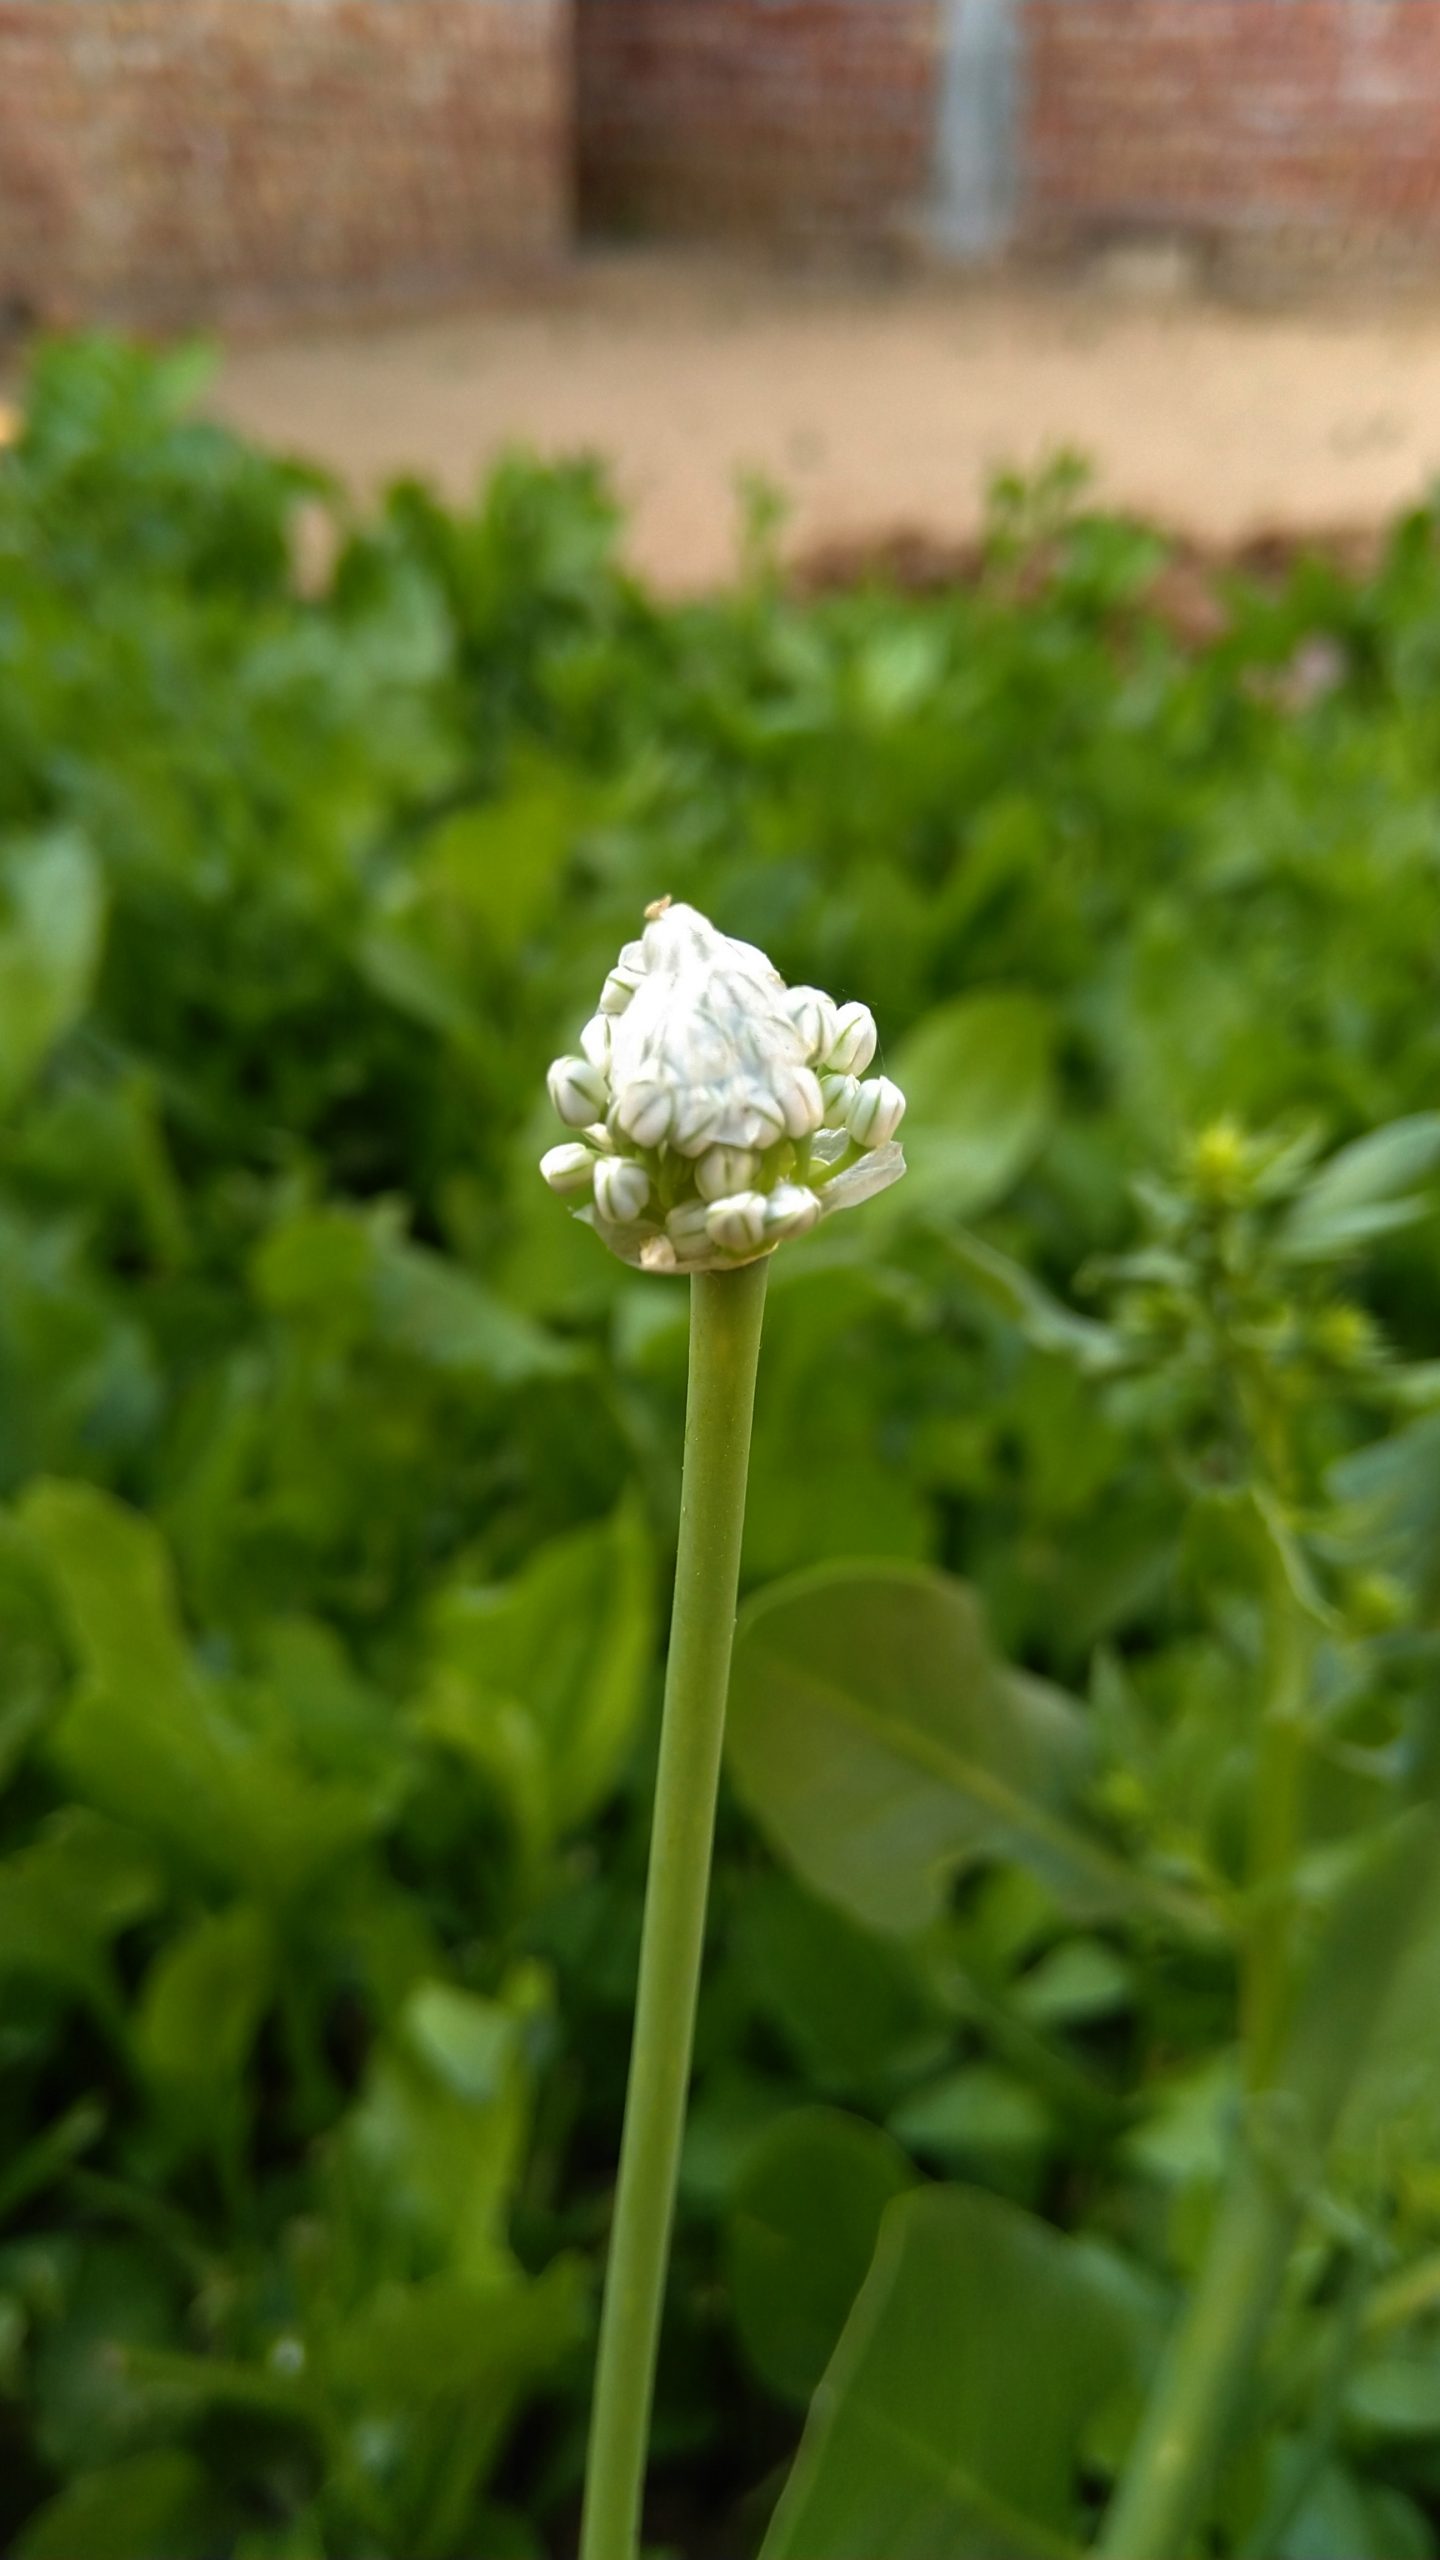 Flower on plant stem